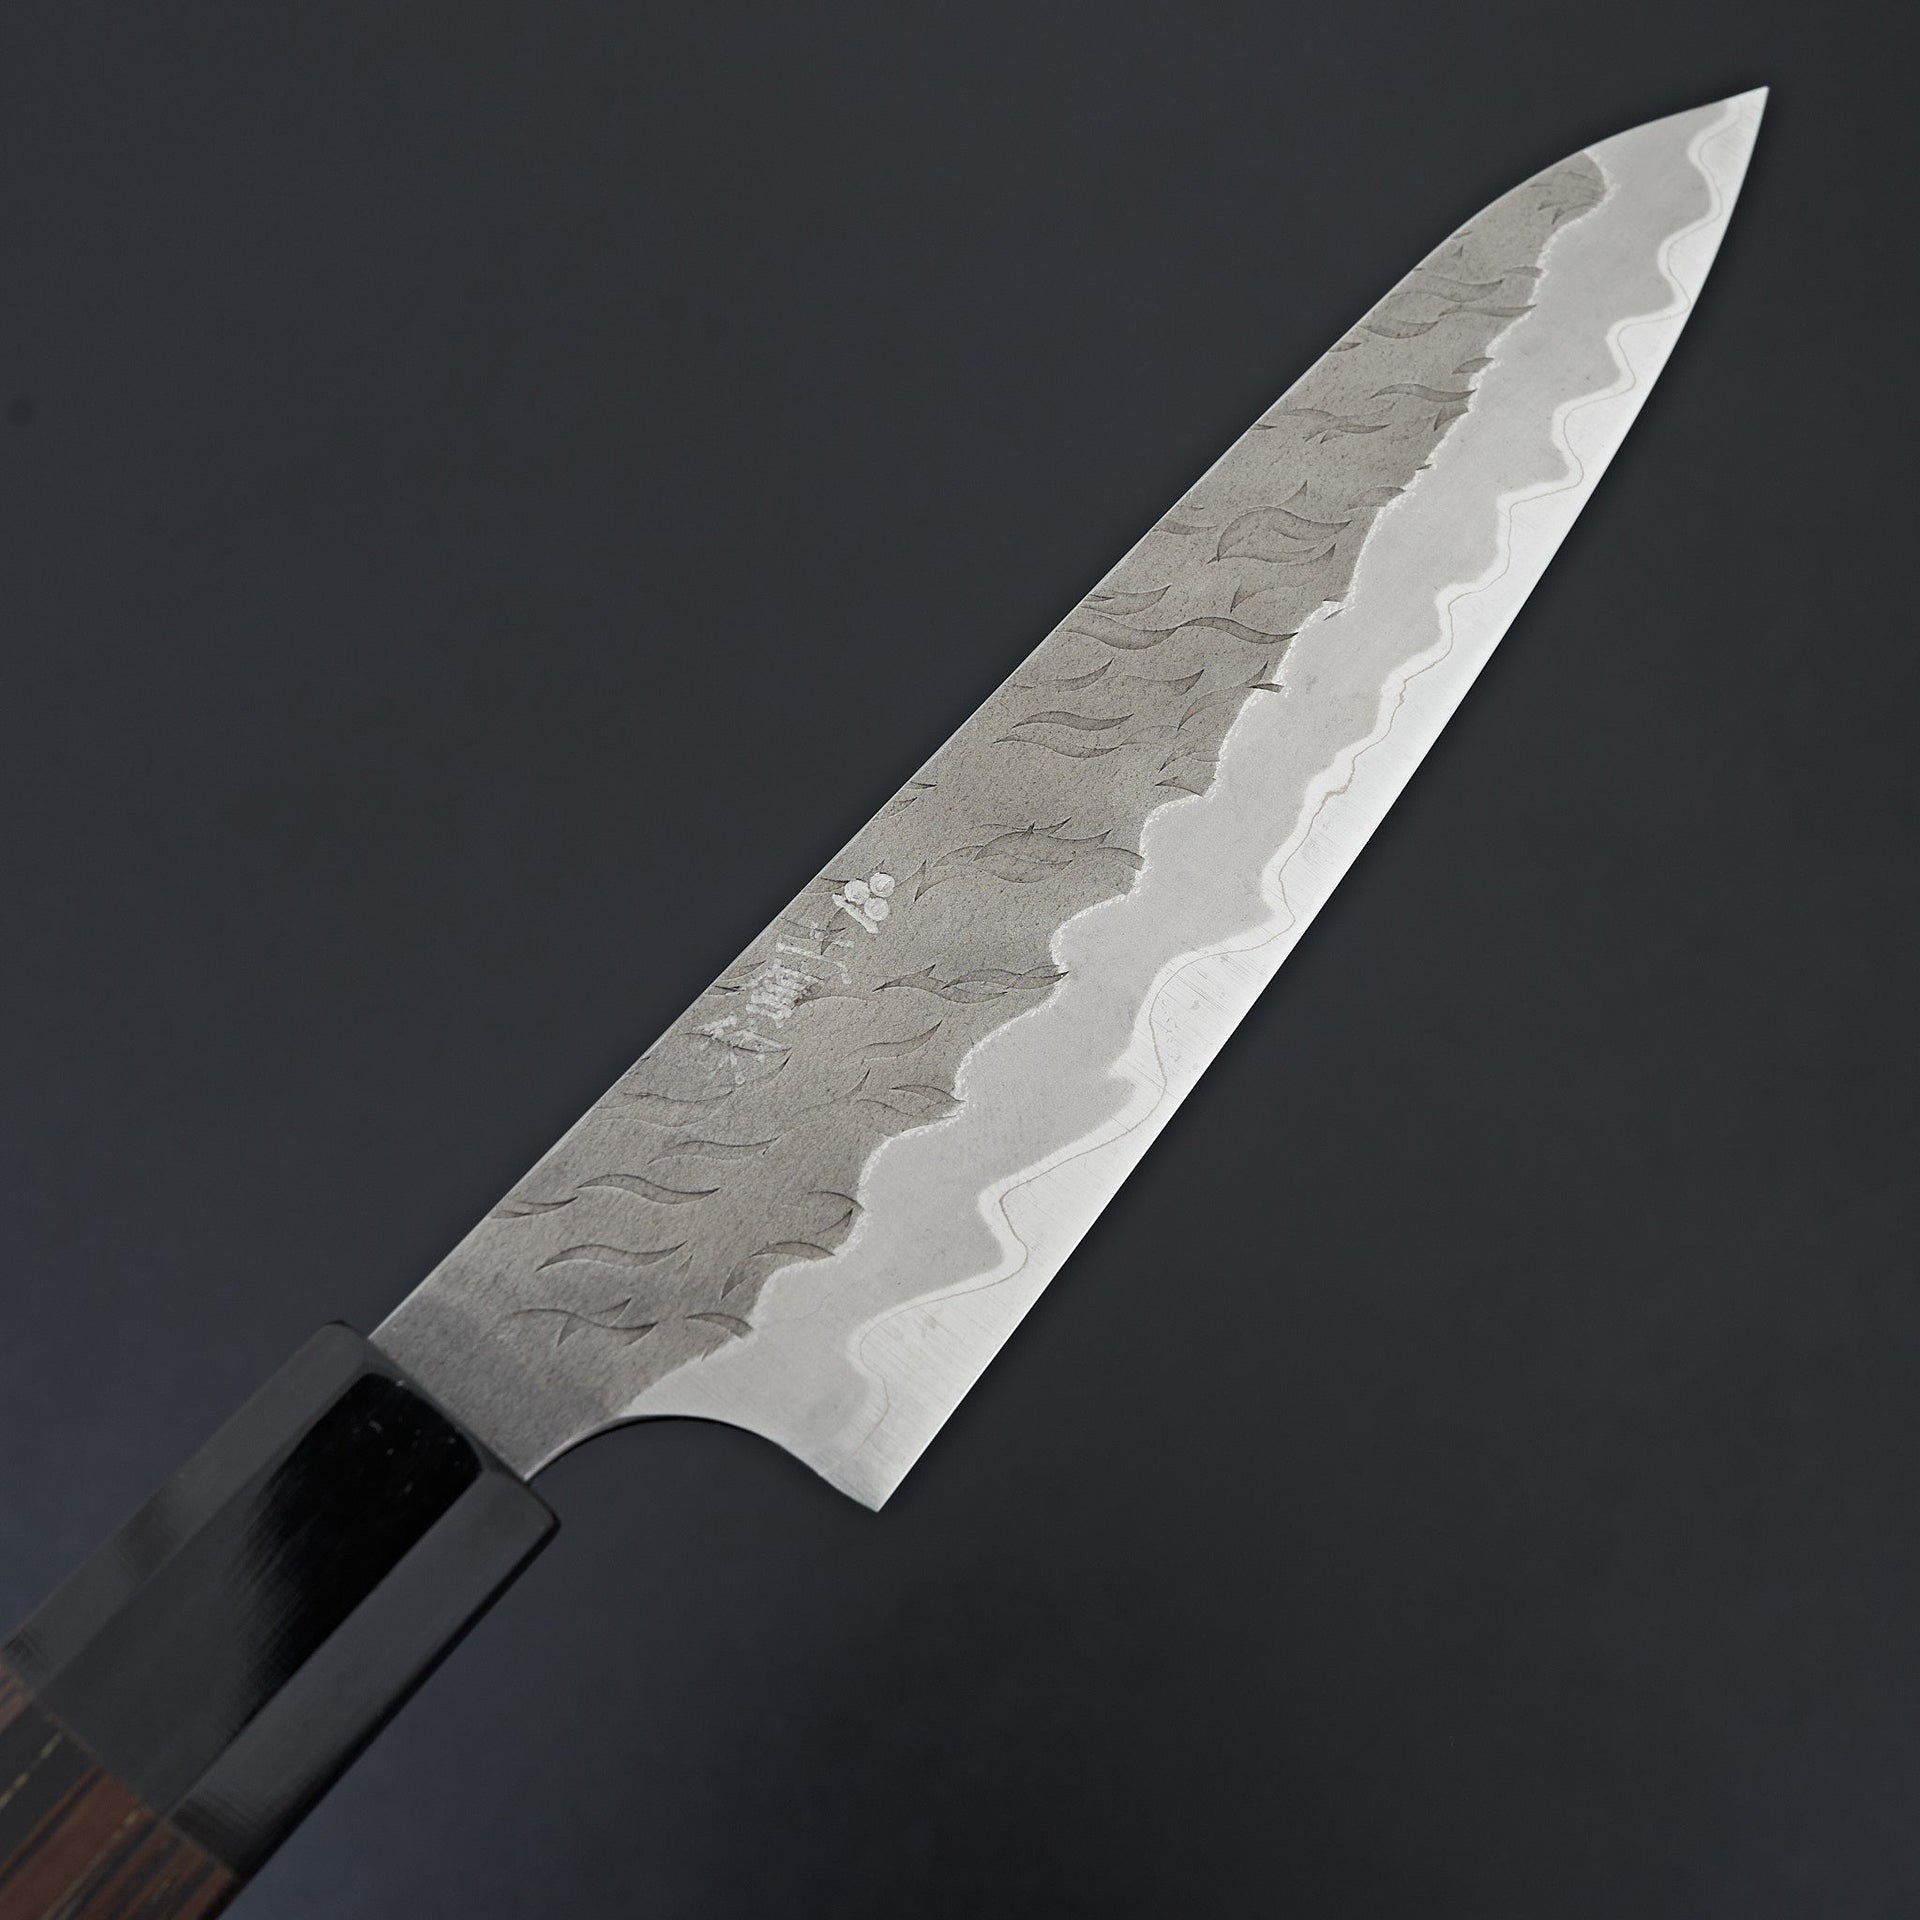 Nigara Hamono AS Migaki Tsuchime Petty 150mm-Knife-Handk-Carbon Knife Co